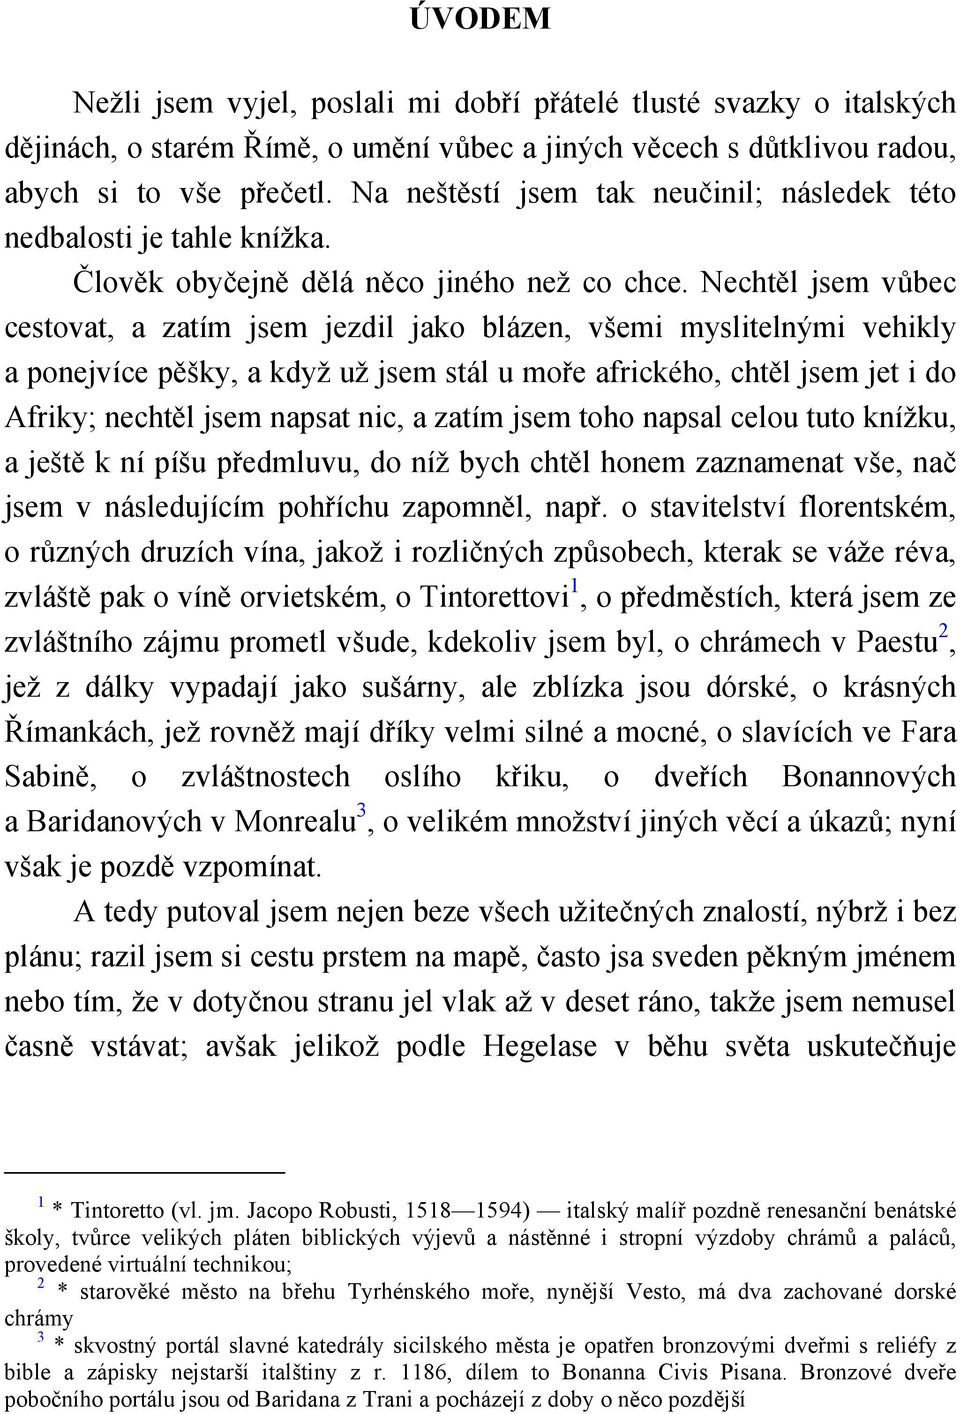 Italské listy. Fejetony. Karel Čapek - PDF Free Download